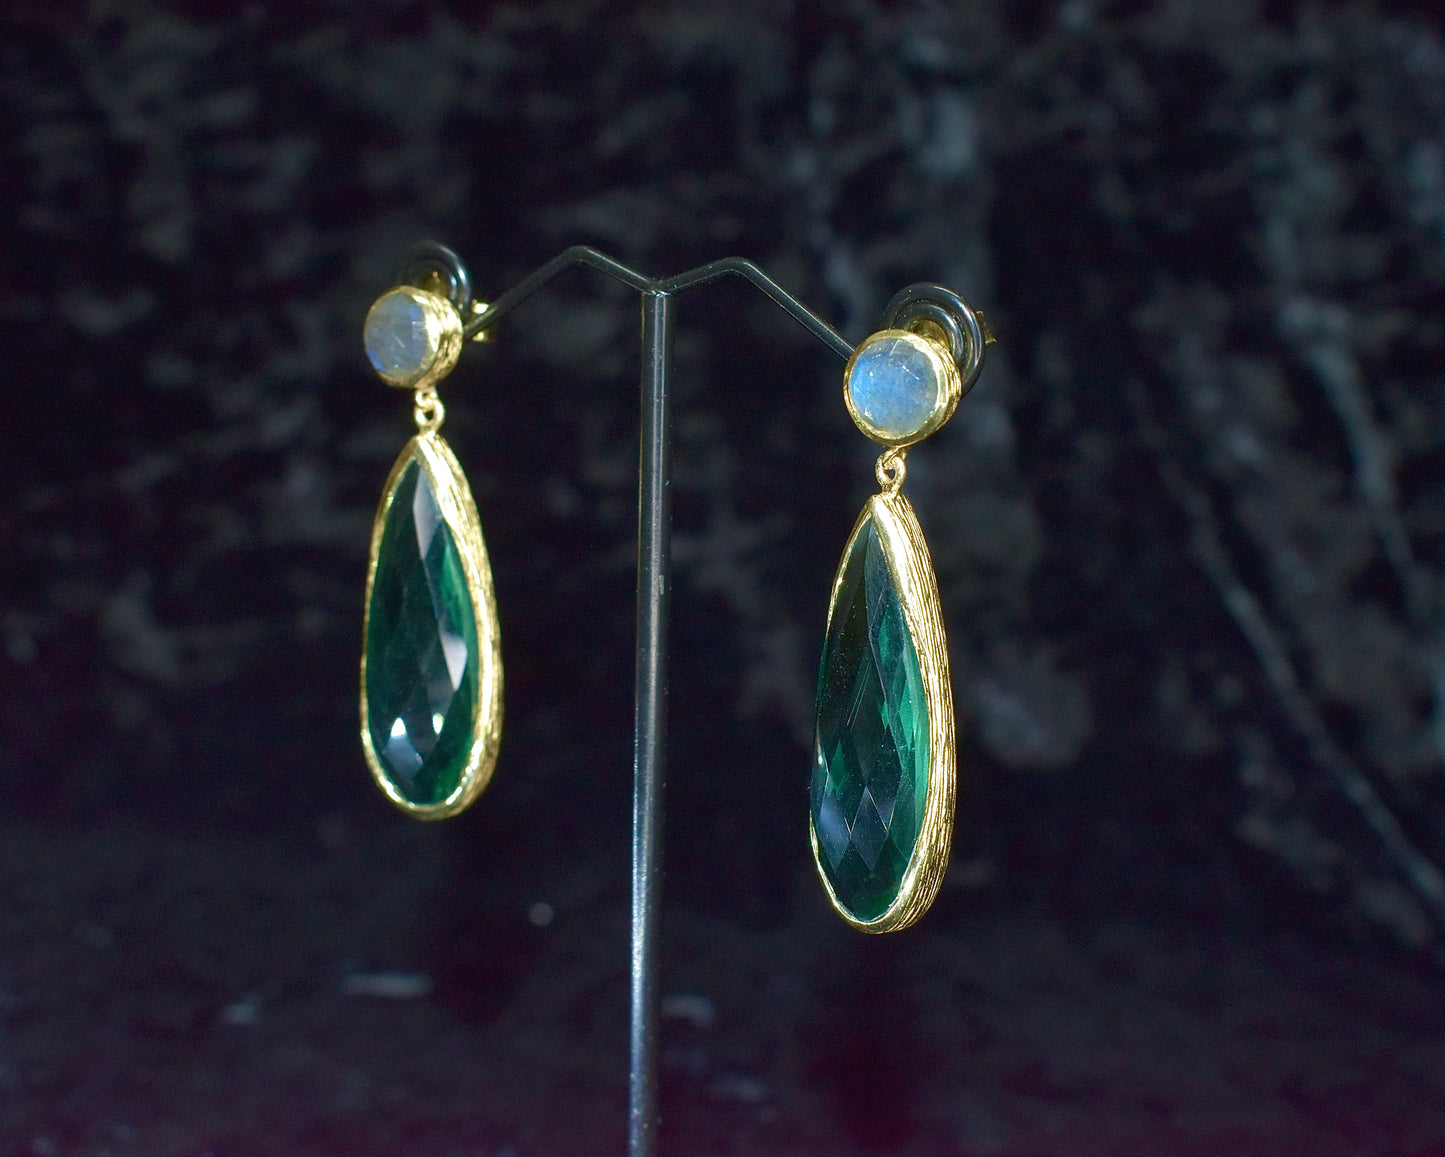 Labradorite and Green Siberian Quartz Gold Plated Earrings